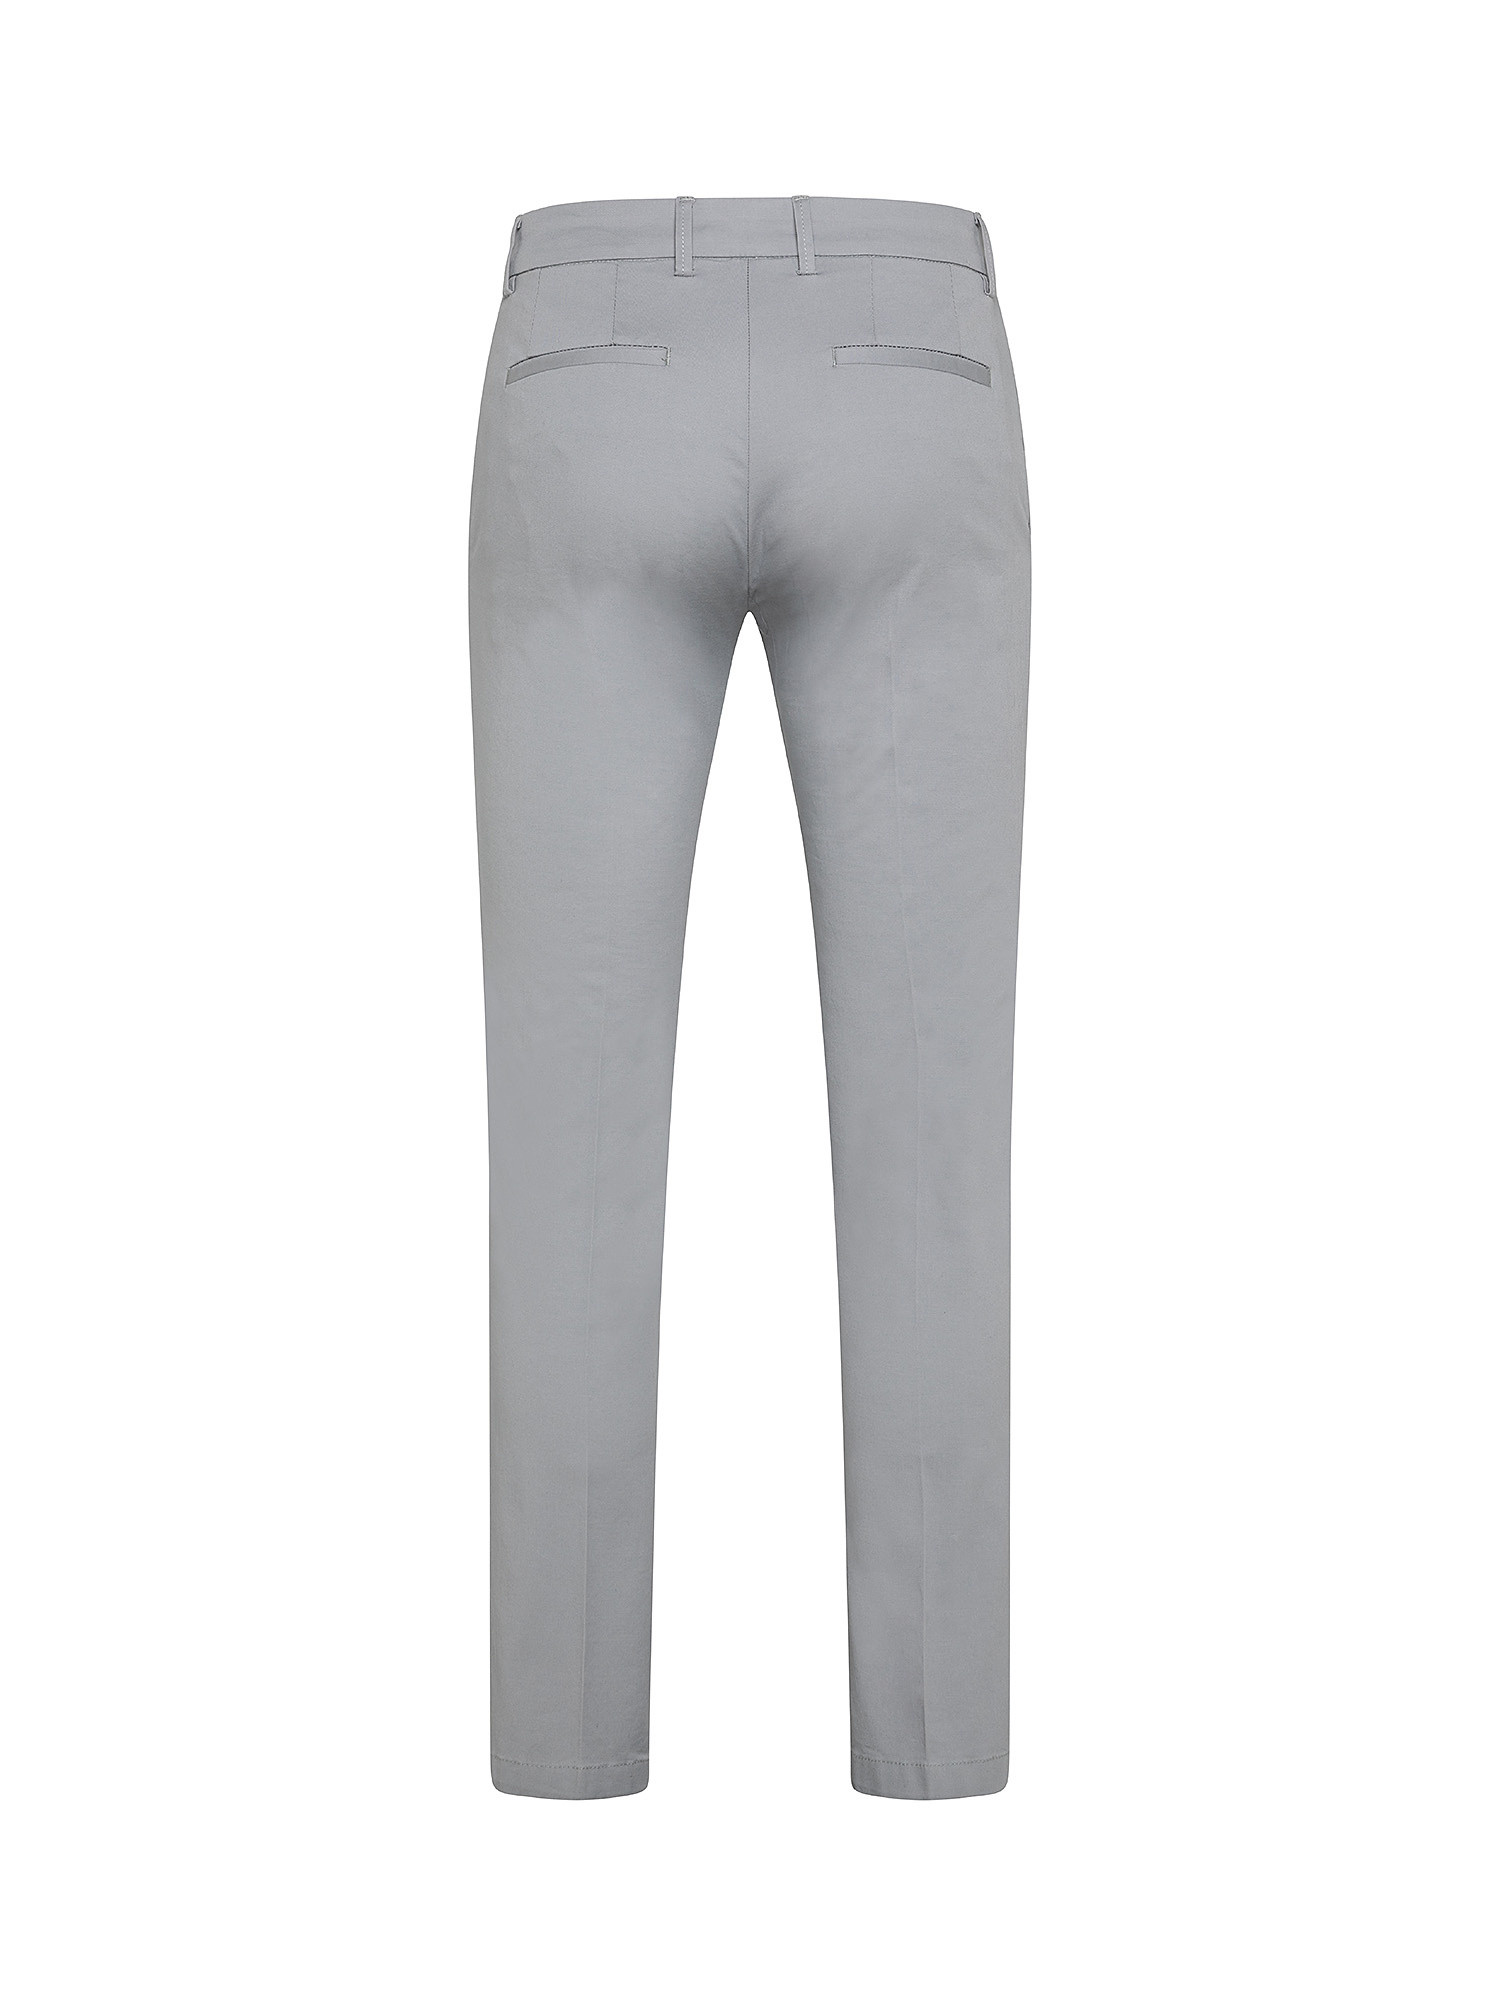 Pantalone chino, Grigio, large image number 1